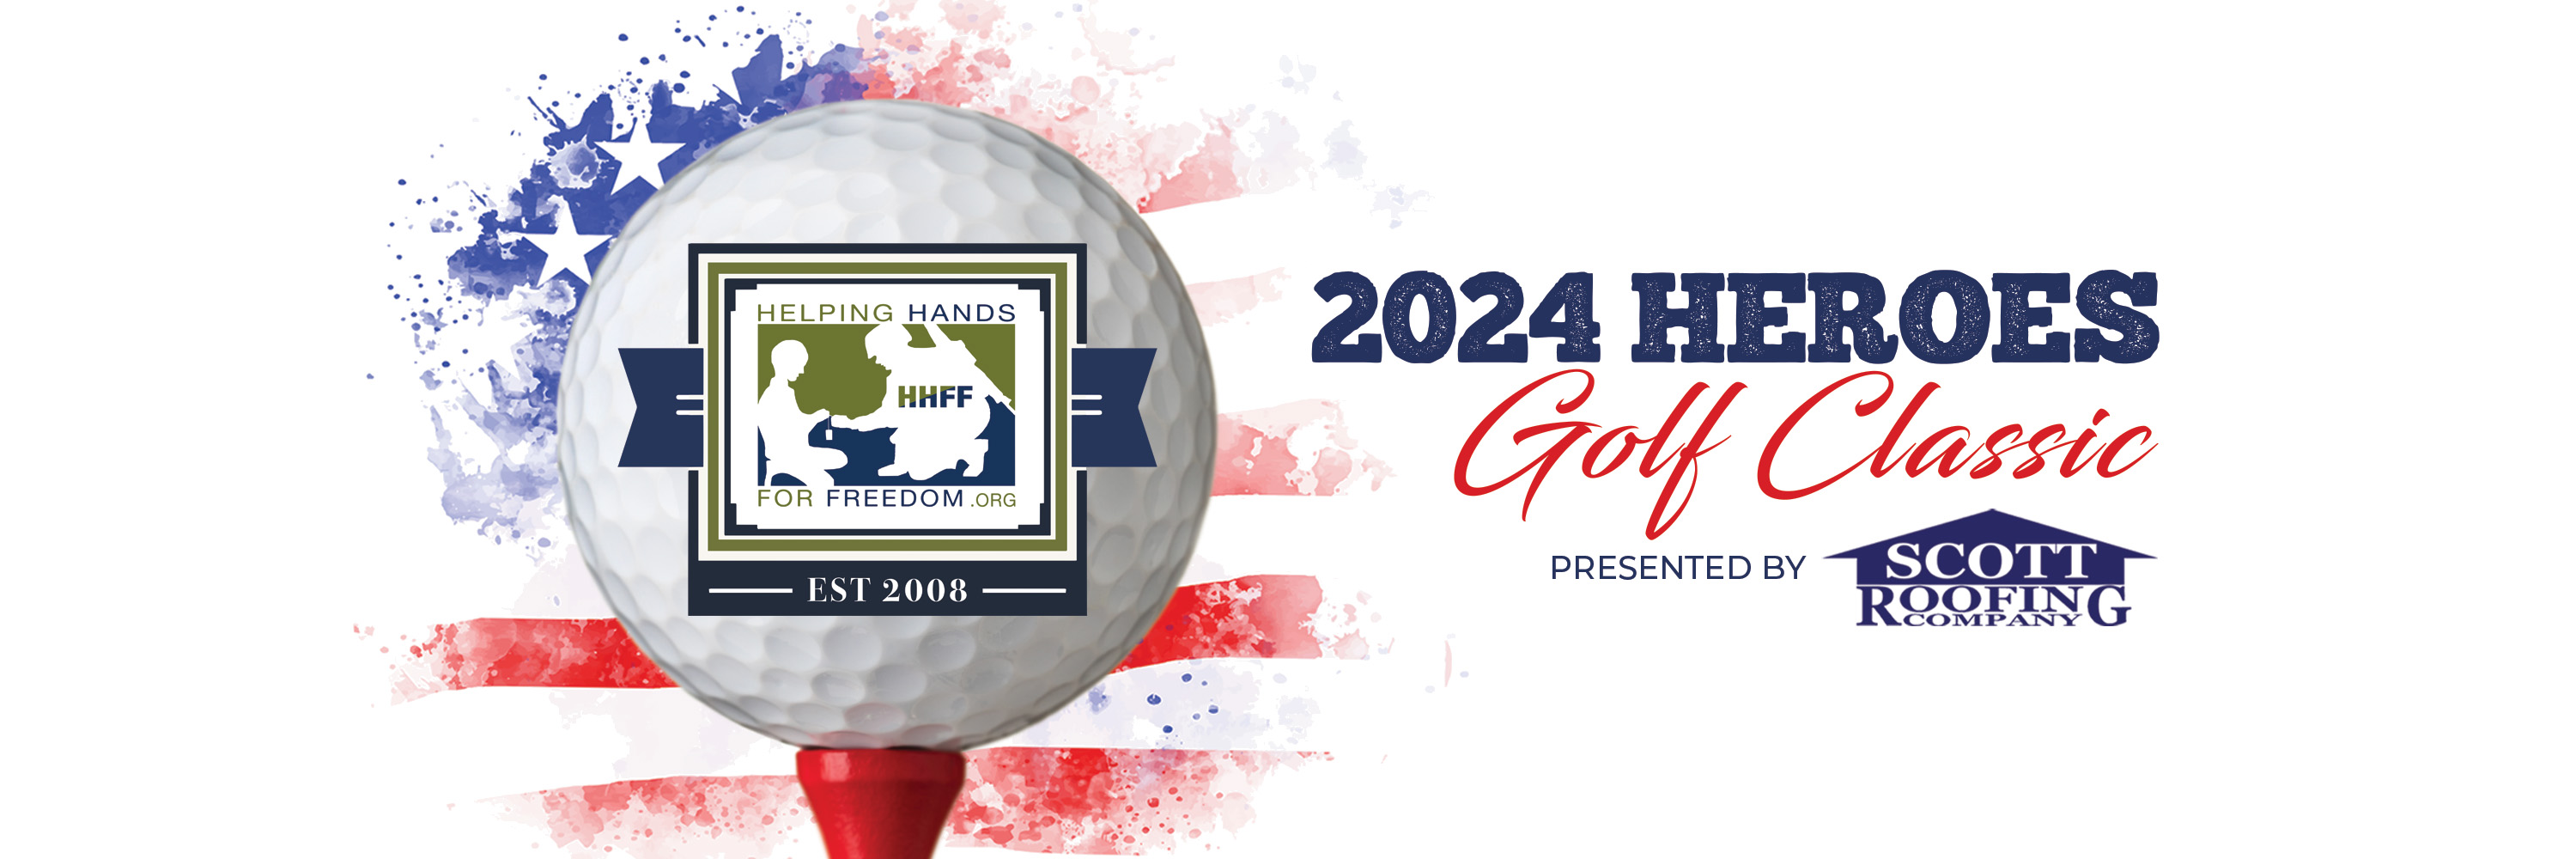 HHFF Heroes Golf Classic